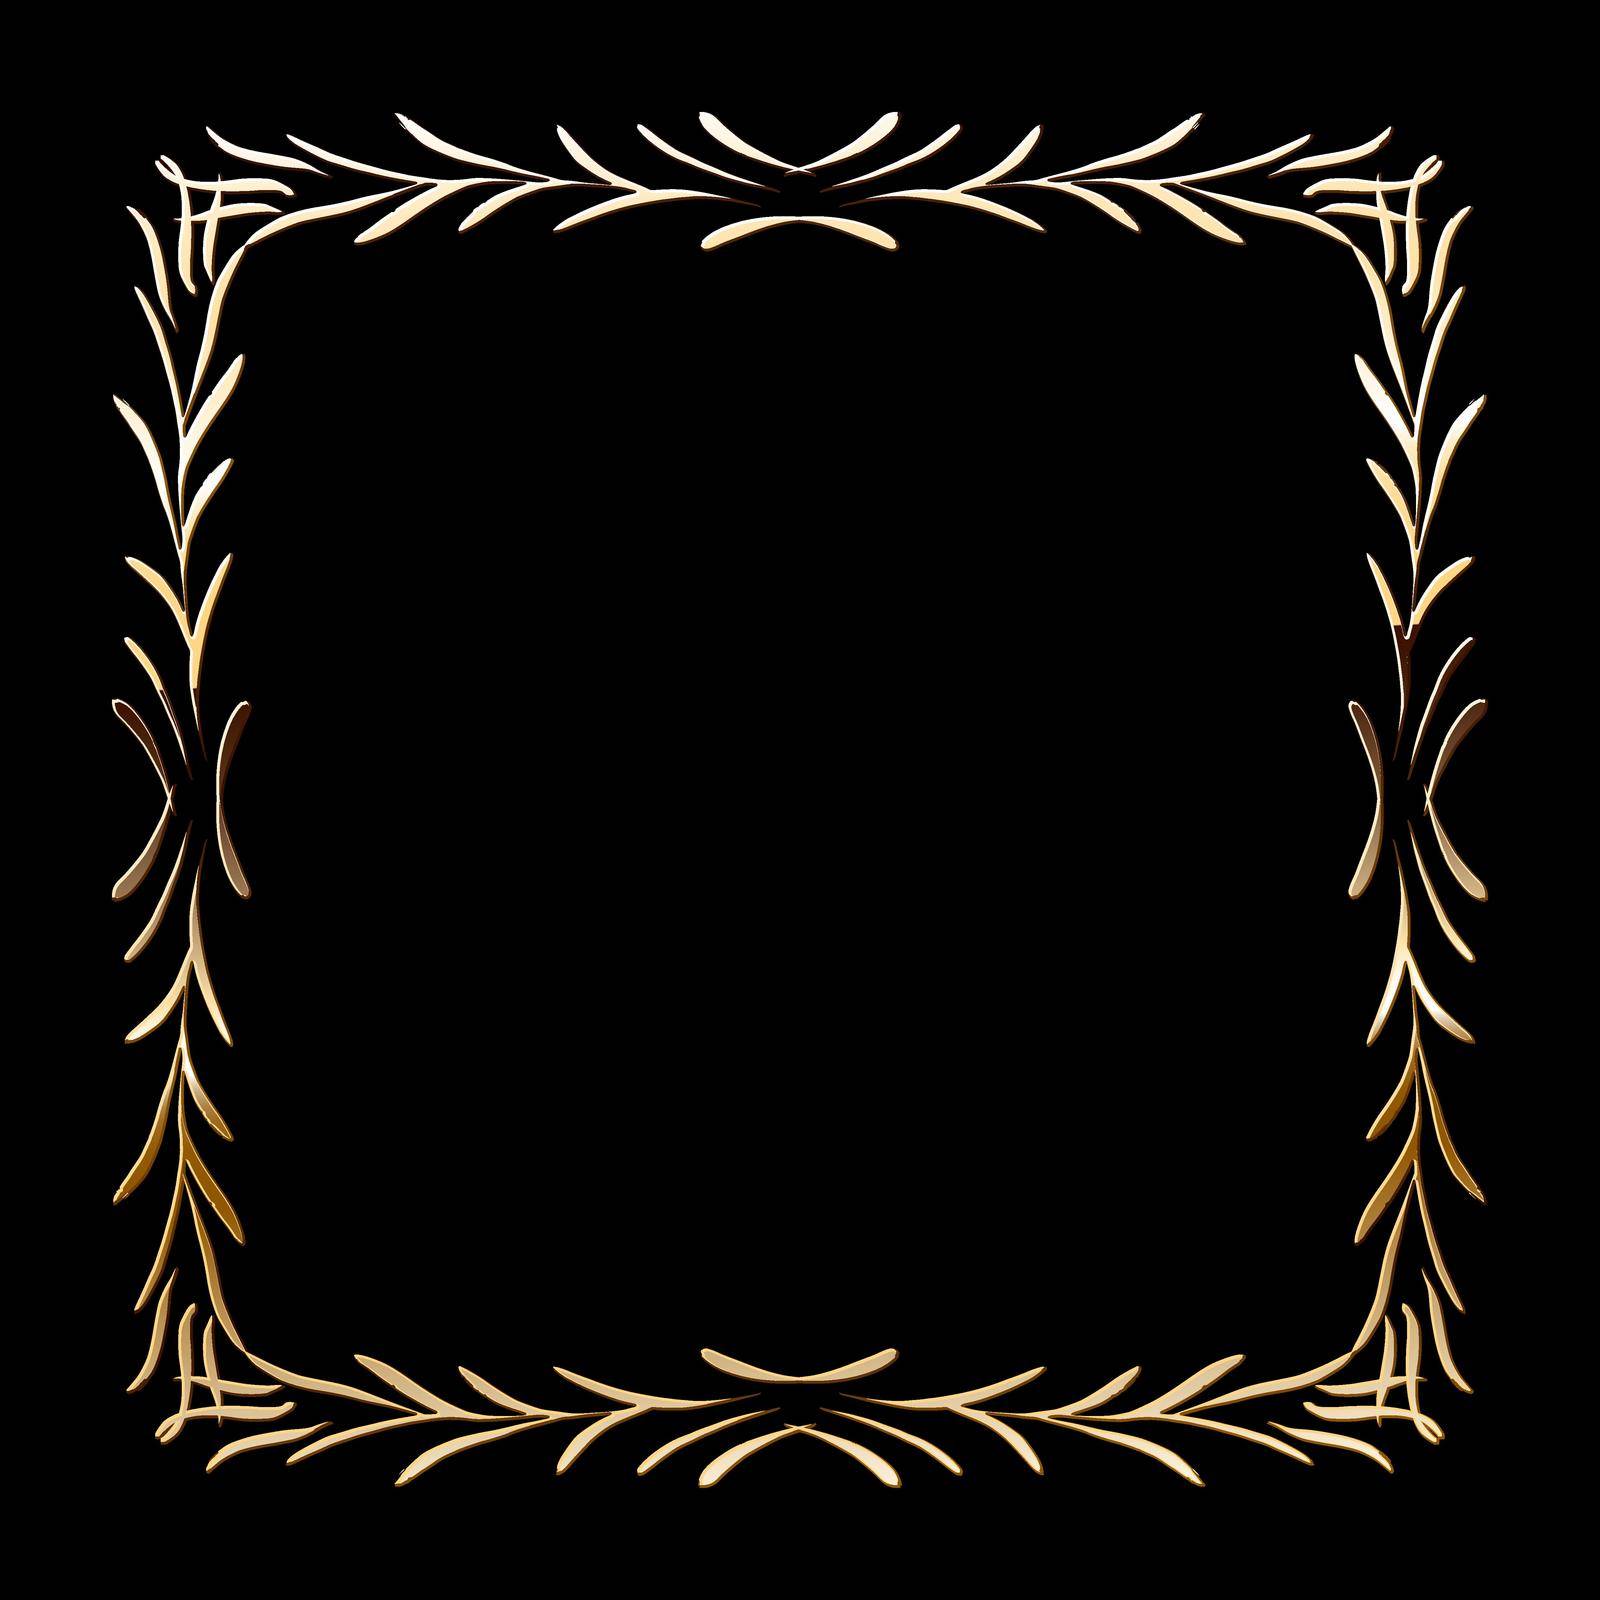 Vector luxury golden frame. Ornamental shiny gold decorative design element. Vector illustration